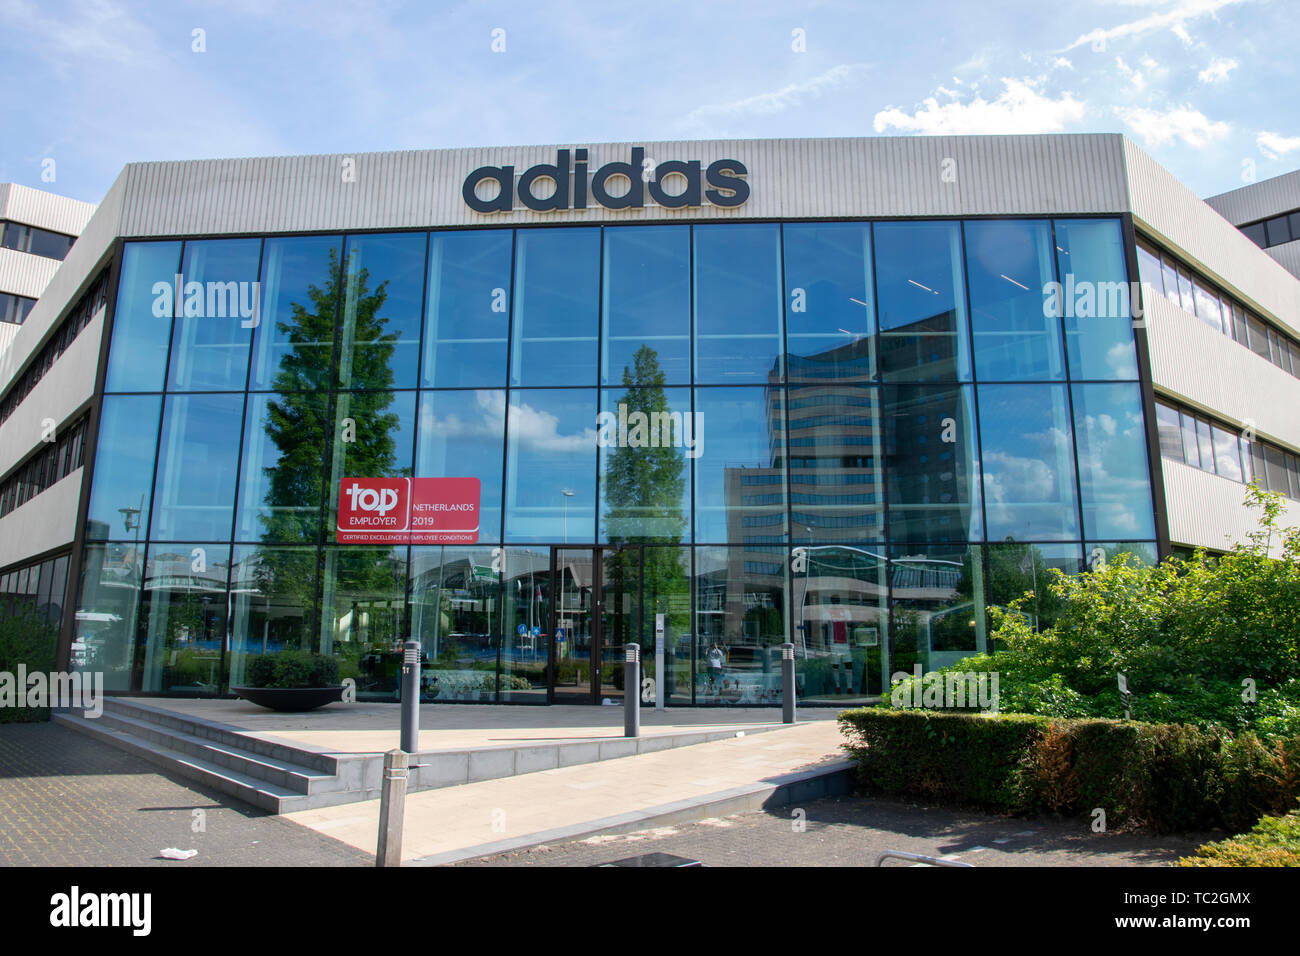 Teórico Hecho un desastre Óptima The Adidas Company Building At Amsterdam The Netherlands 2019 Stock Photo -  Alamy